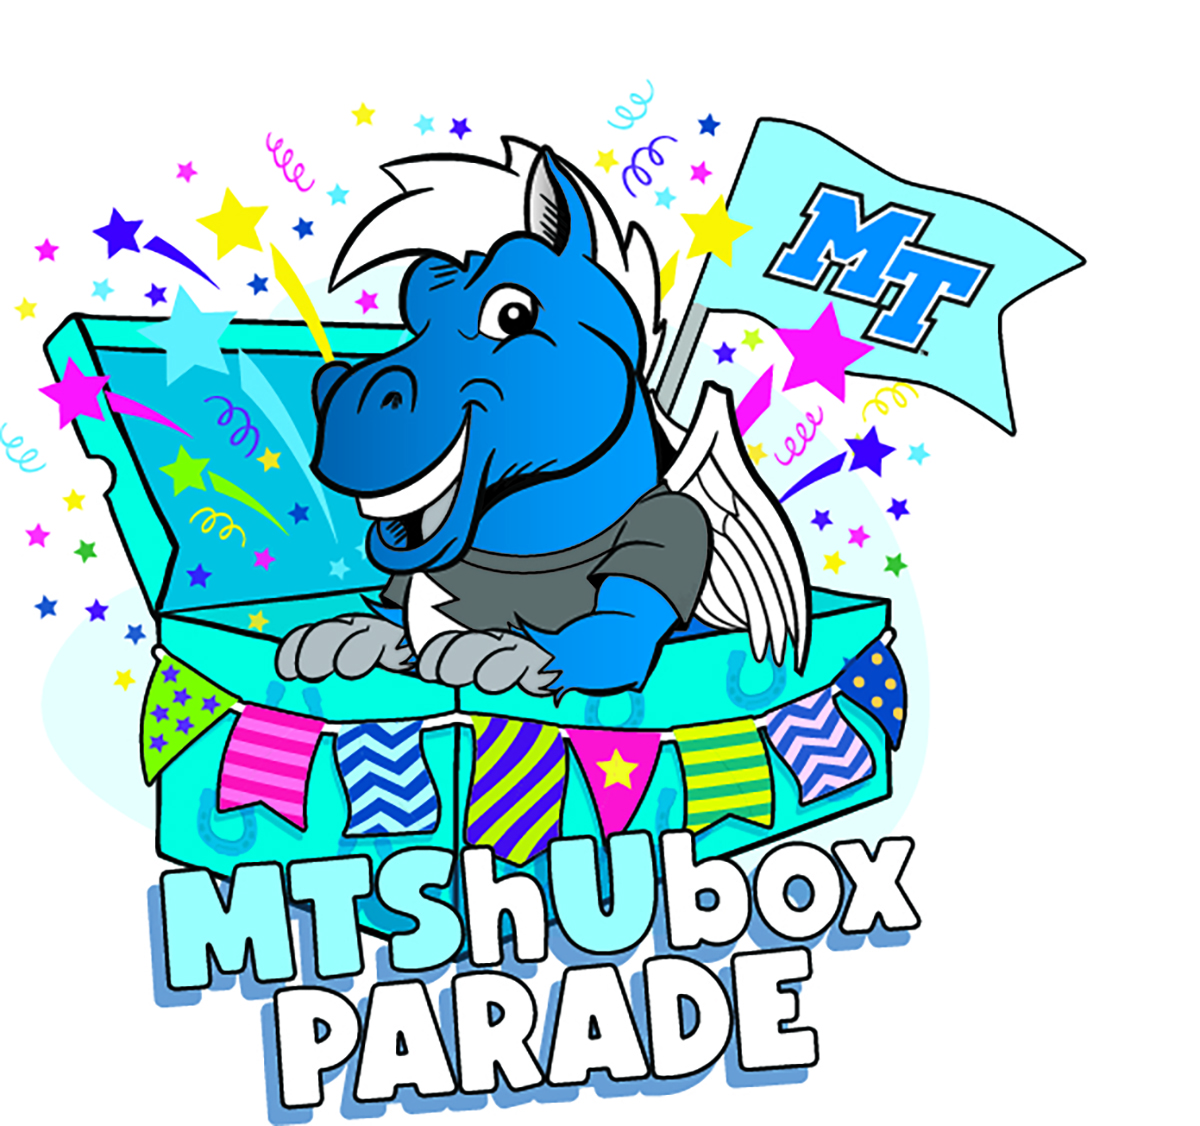 MTSU Shoebox Parade graphic